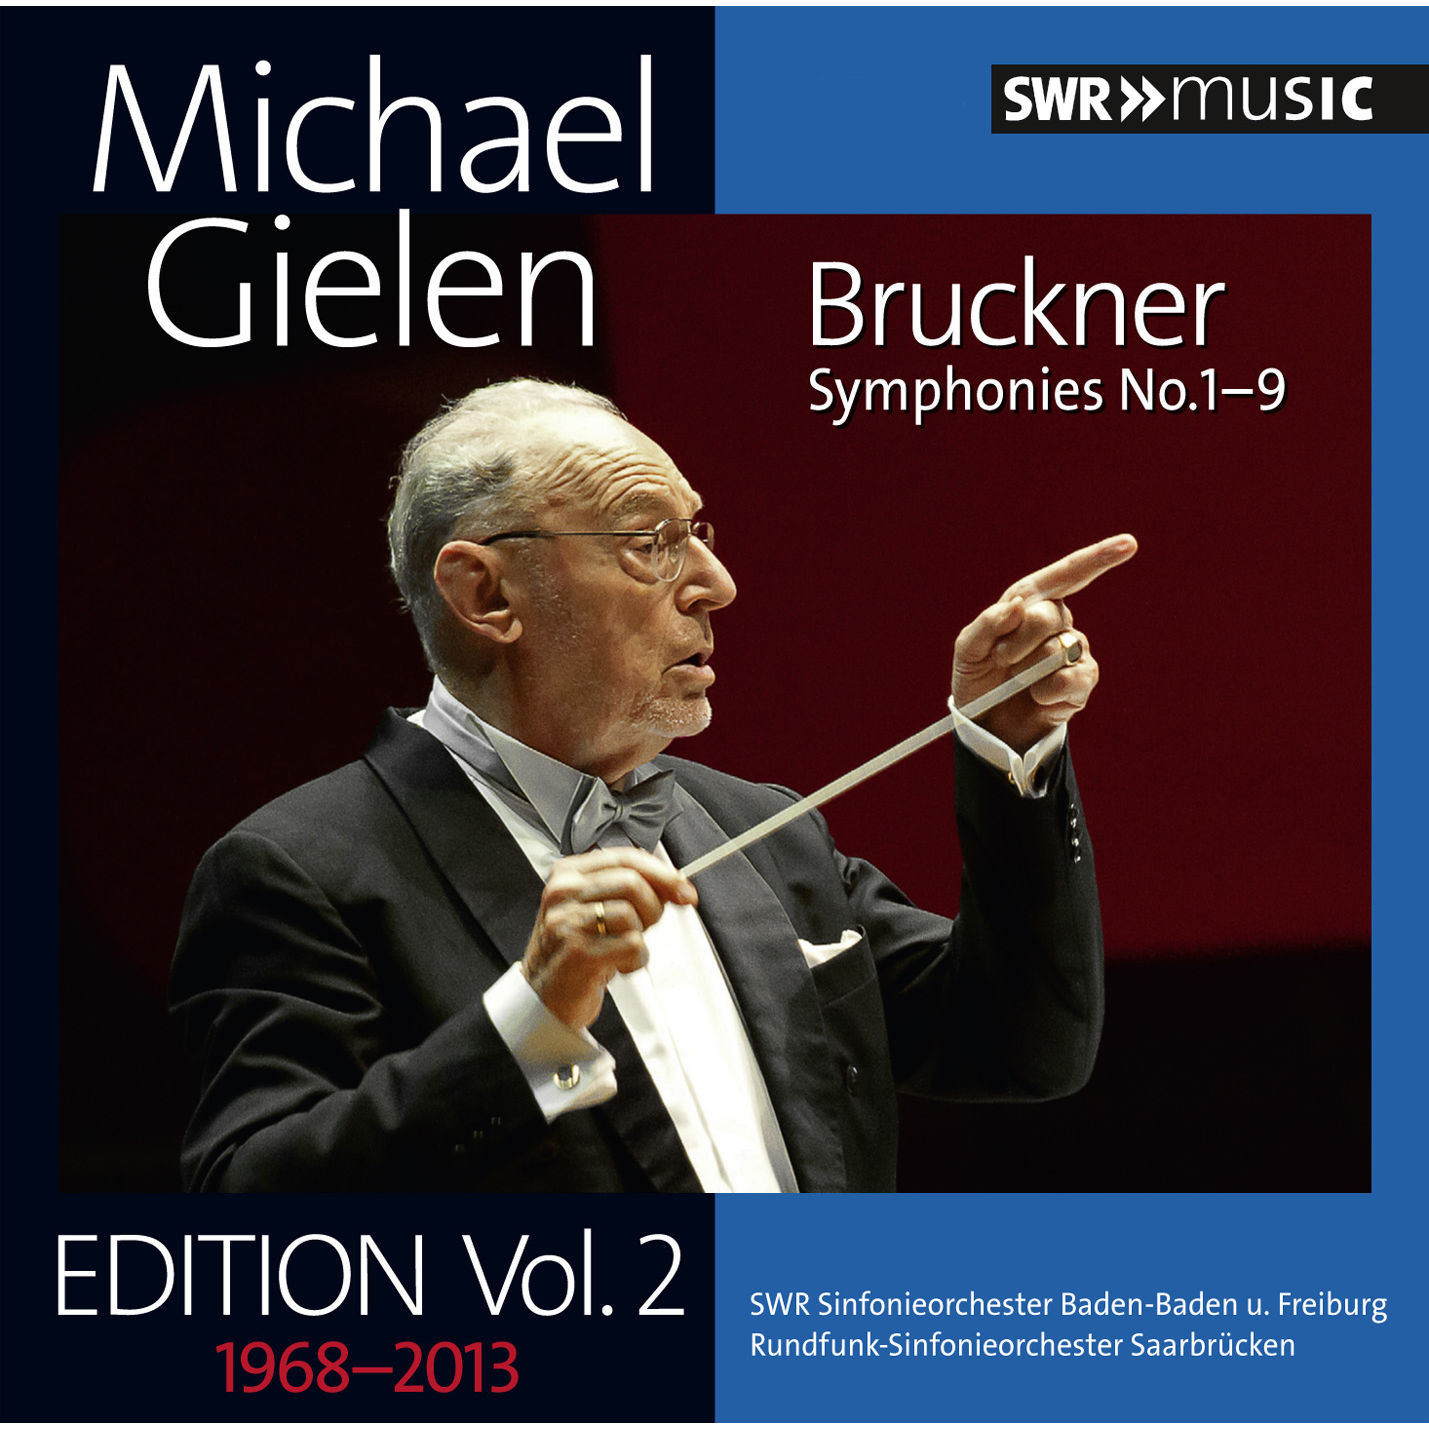 SWR Sinfonieorchester Baden Vol. 2 cd02- Bruckner Symphonies